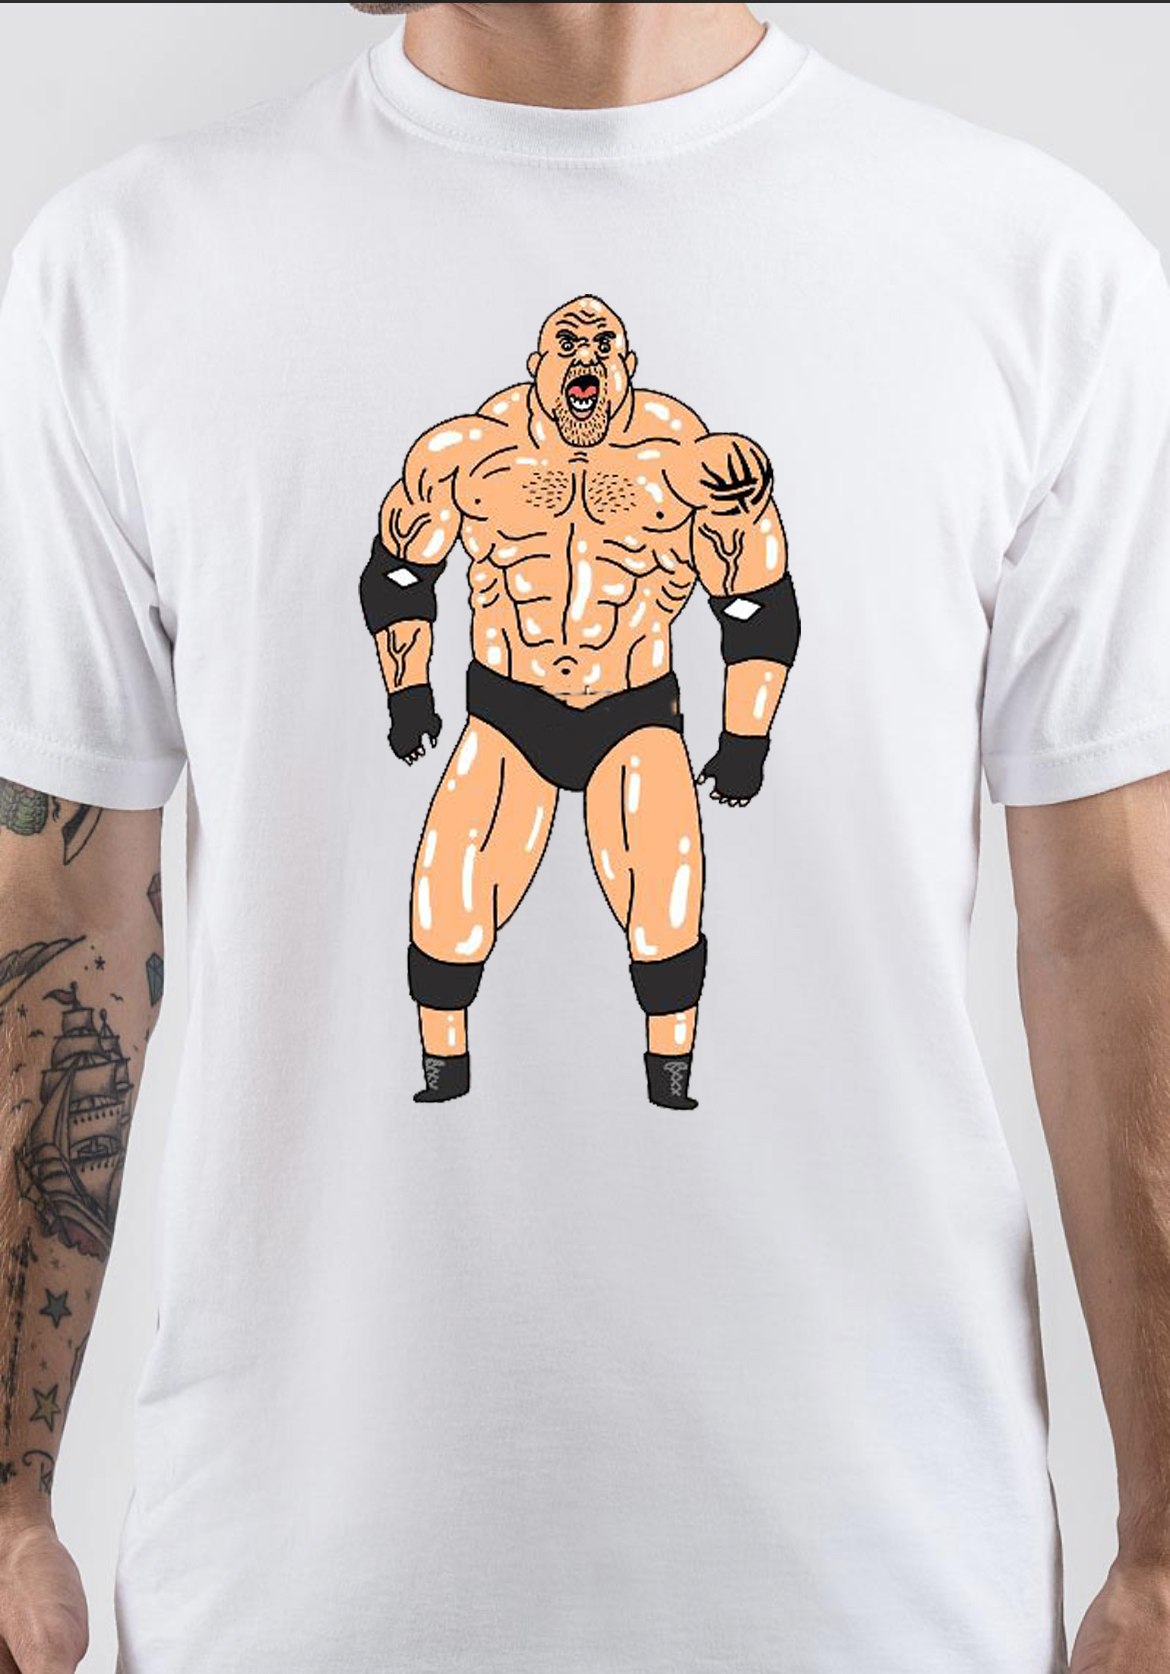 WWE Wrestlers Goldberg Shoulder Tattoo Design Drawing For Beginners | How  to Draw a Logo of Goldberg - YouTube